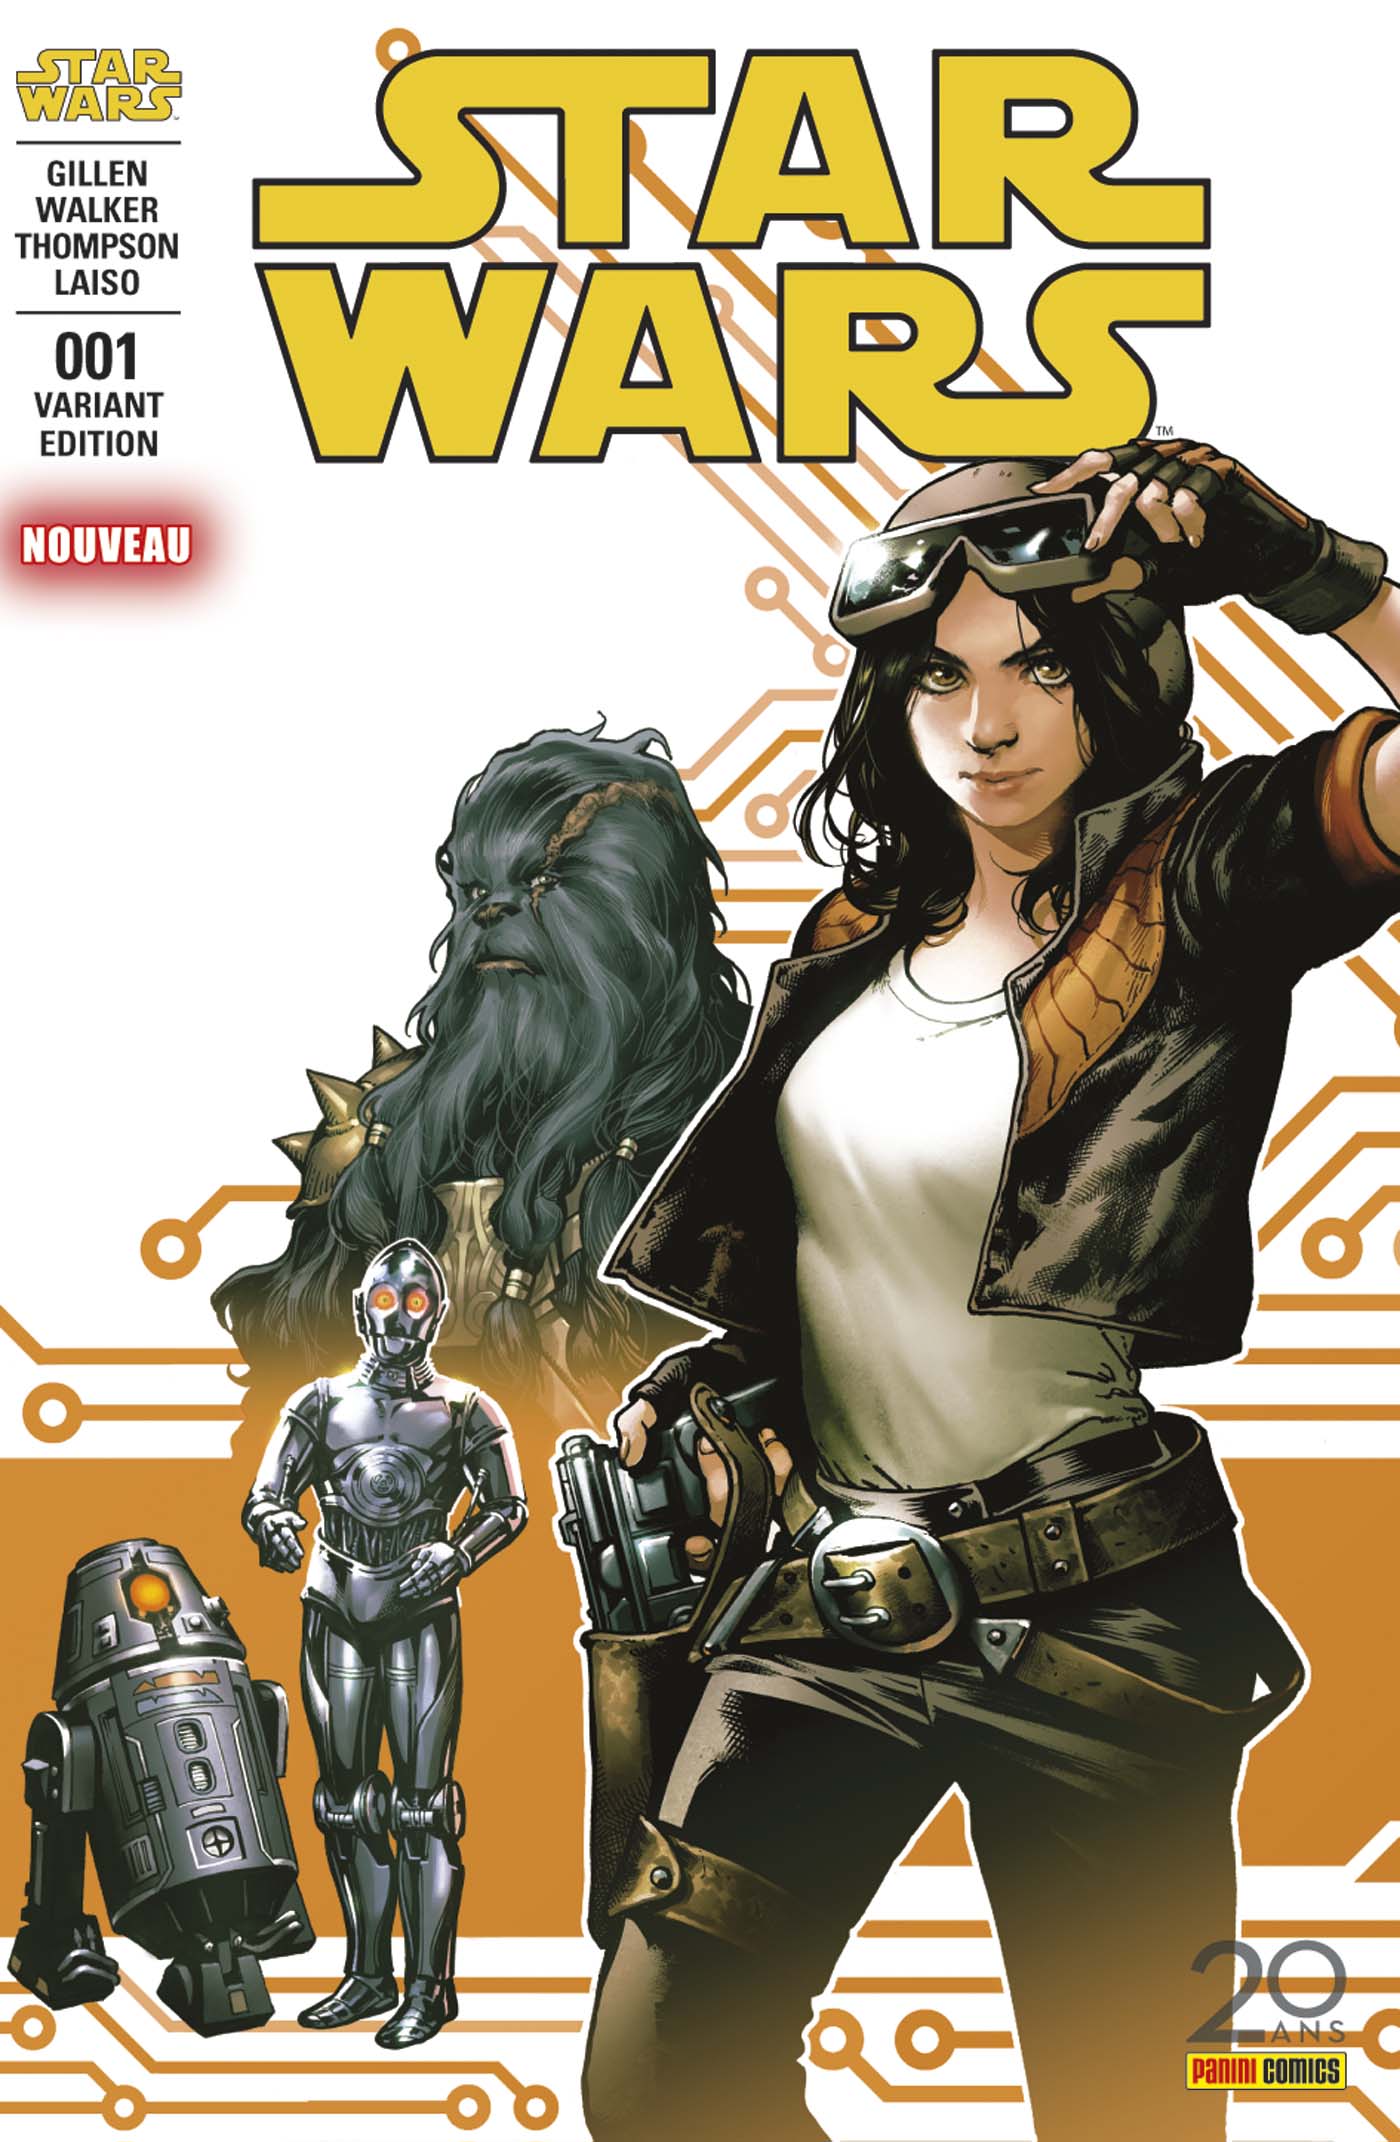 Star Wars Comics 01 - Couverture B